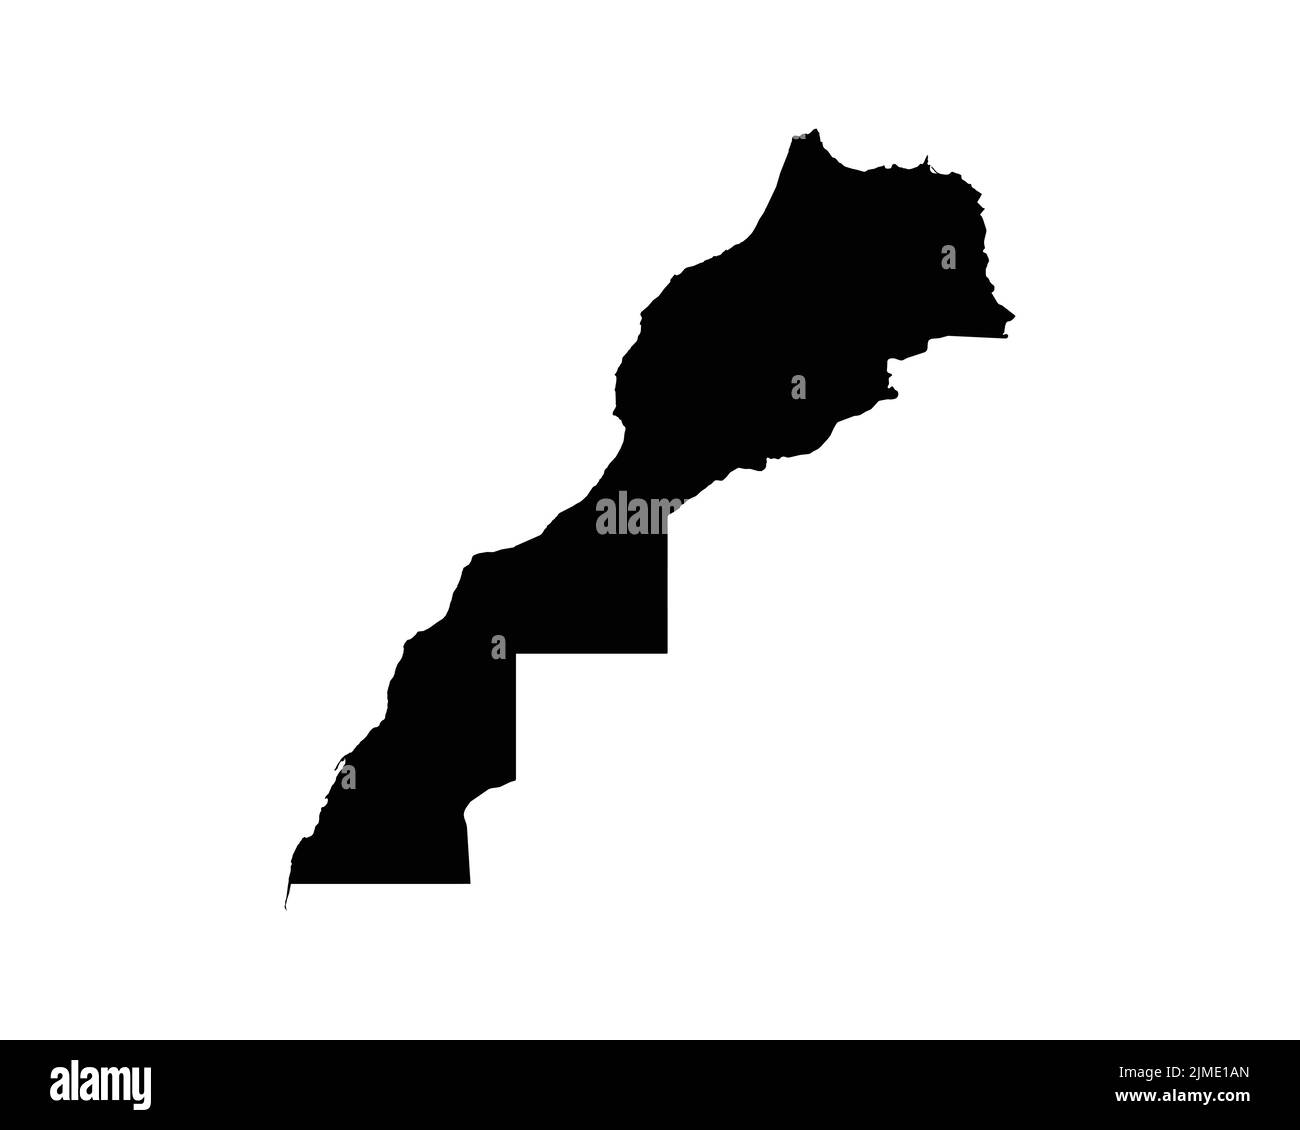 Carte du Maroc. Carte du Maroc. Black and White National Nation Outline Geography Border Boundary Shape Territory Vector Illustration EPS Clipart Illustration de Vecteur